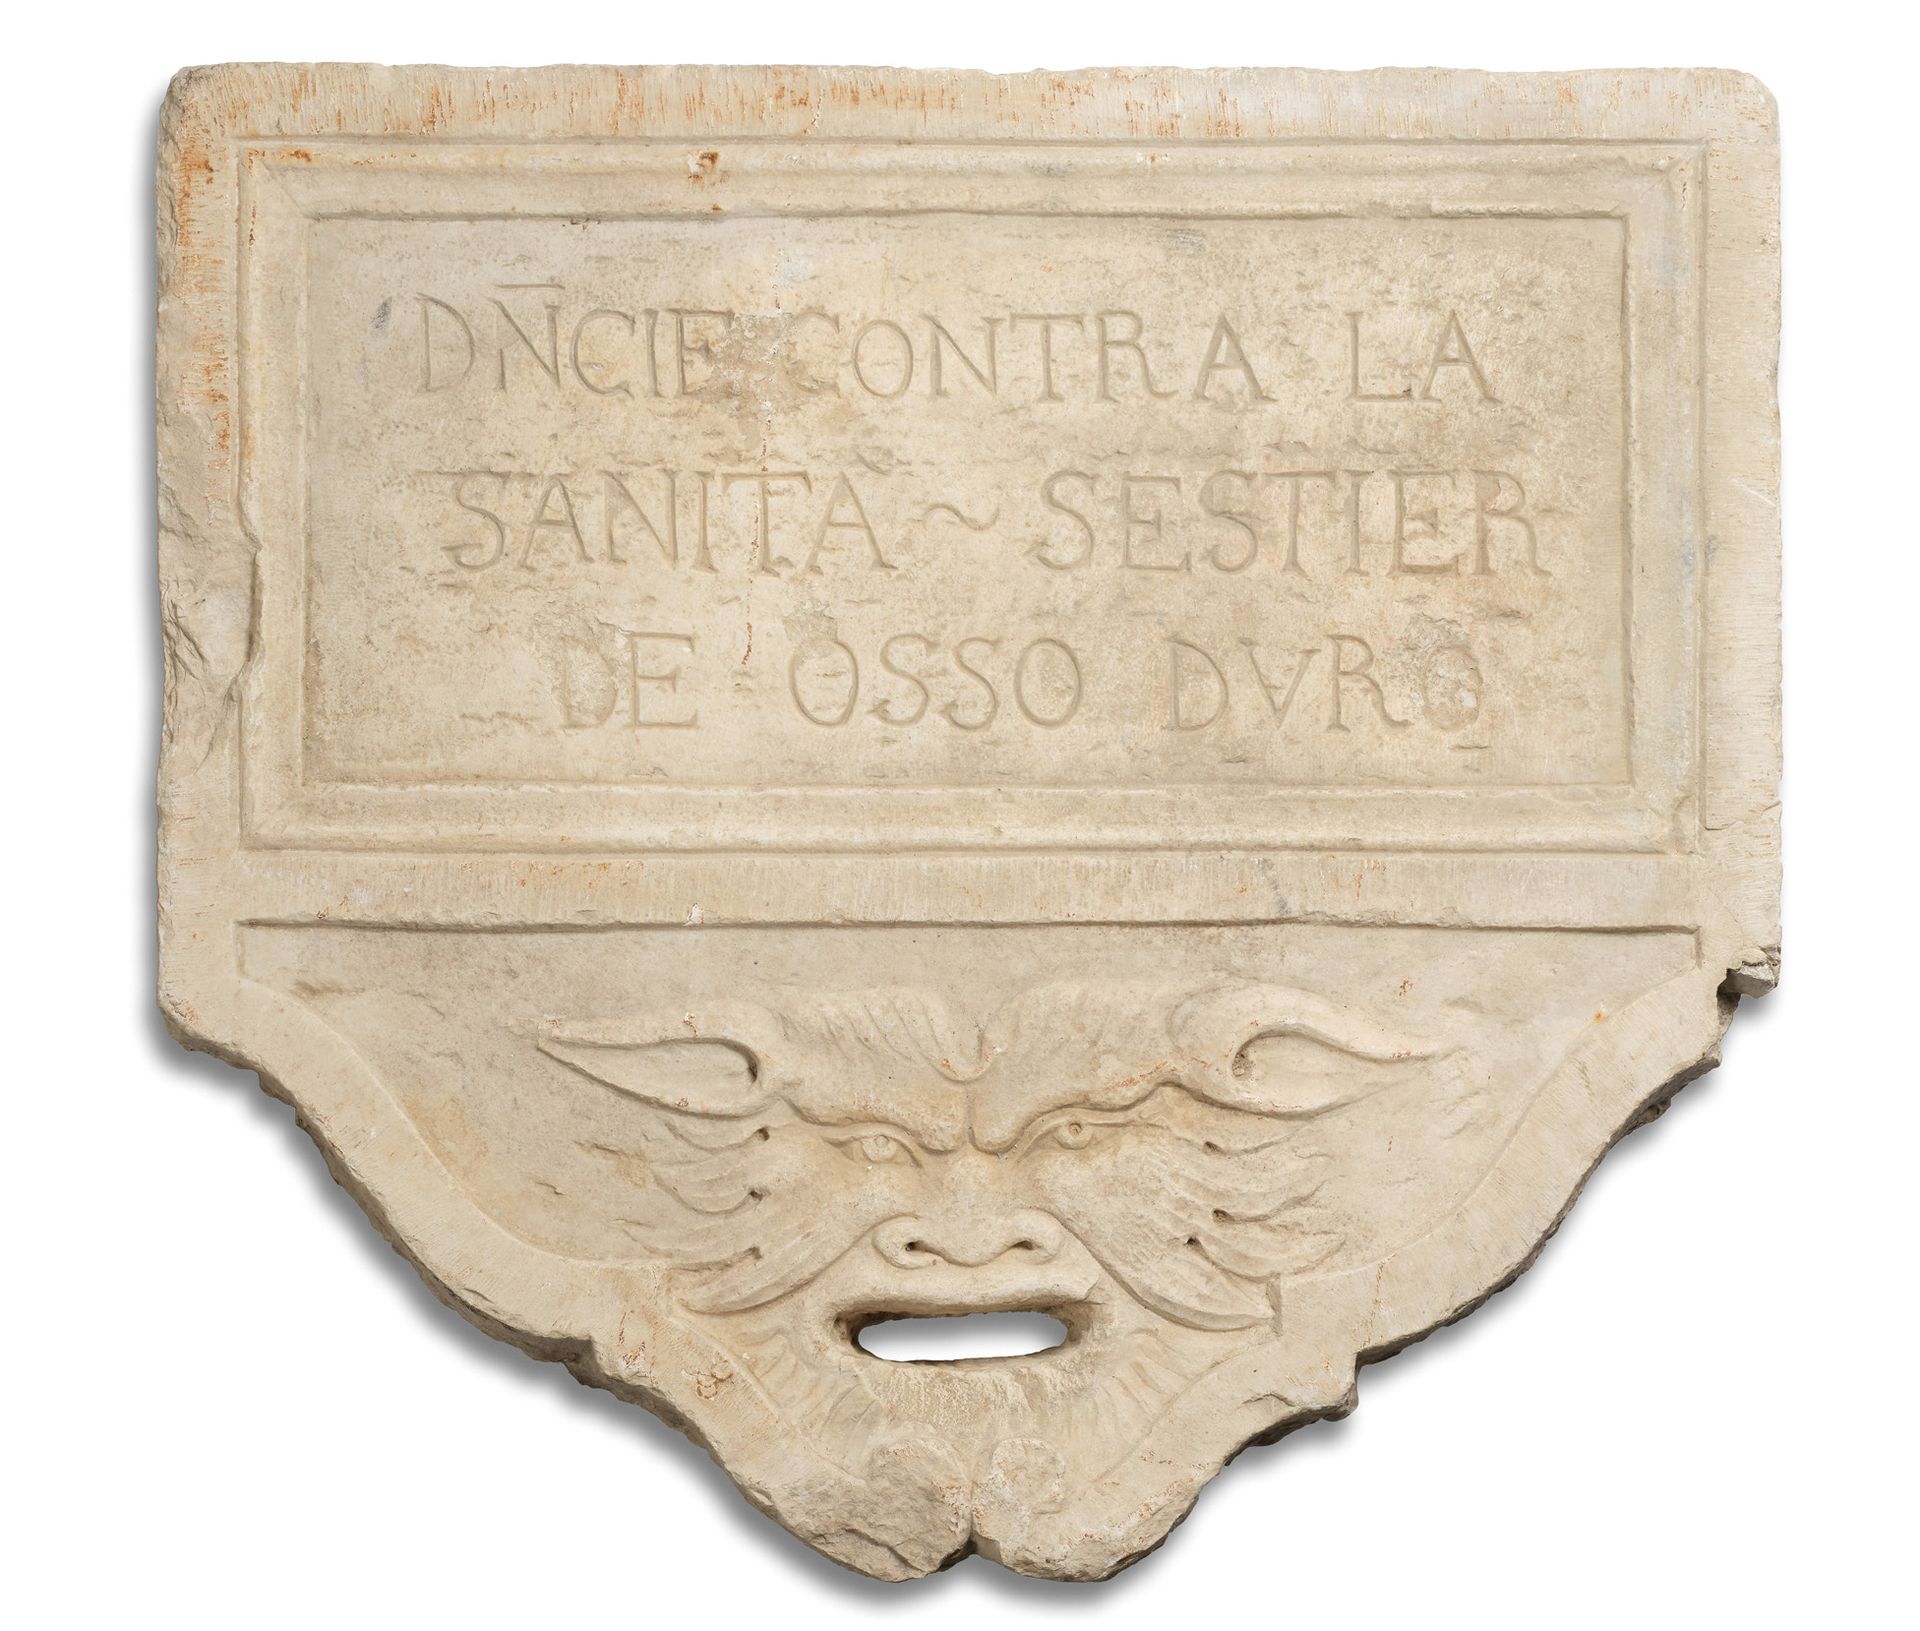 Null "BOCCA DI LEONE"
Rare stone denunciation mouth carved in low relief where a&hellip;